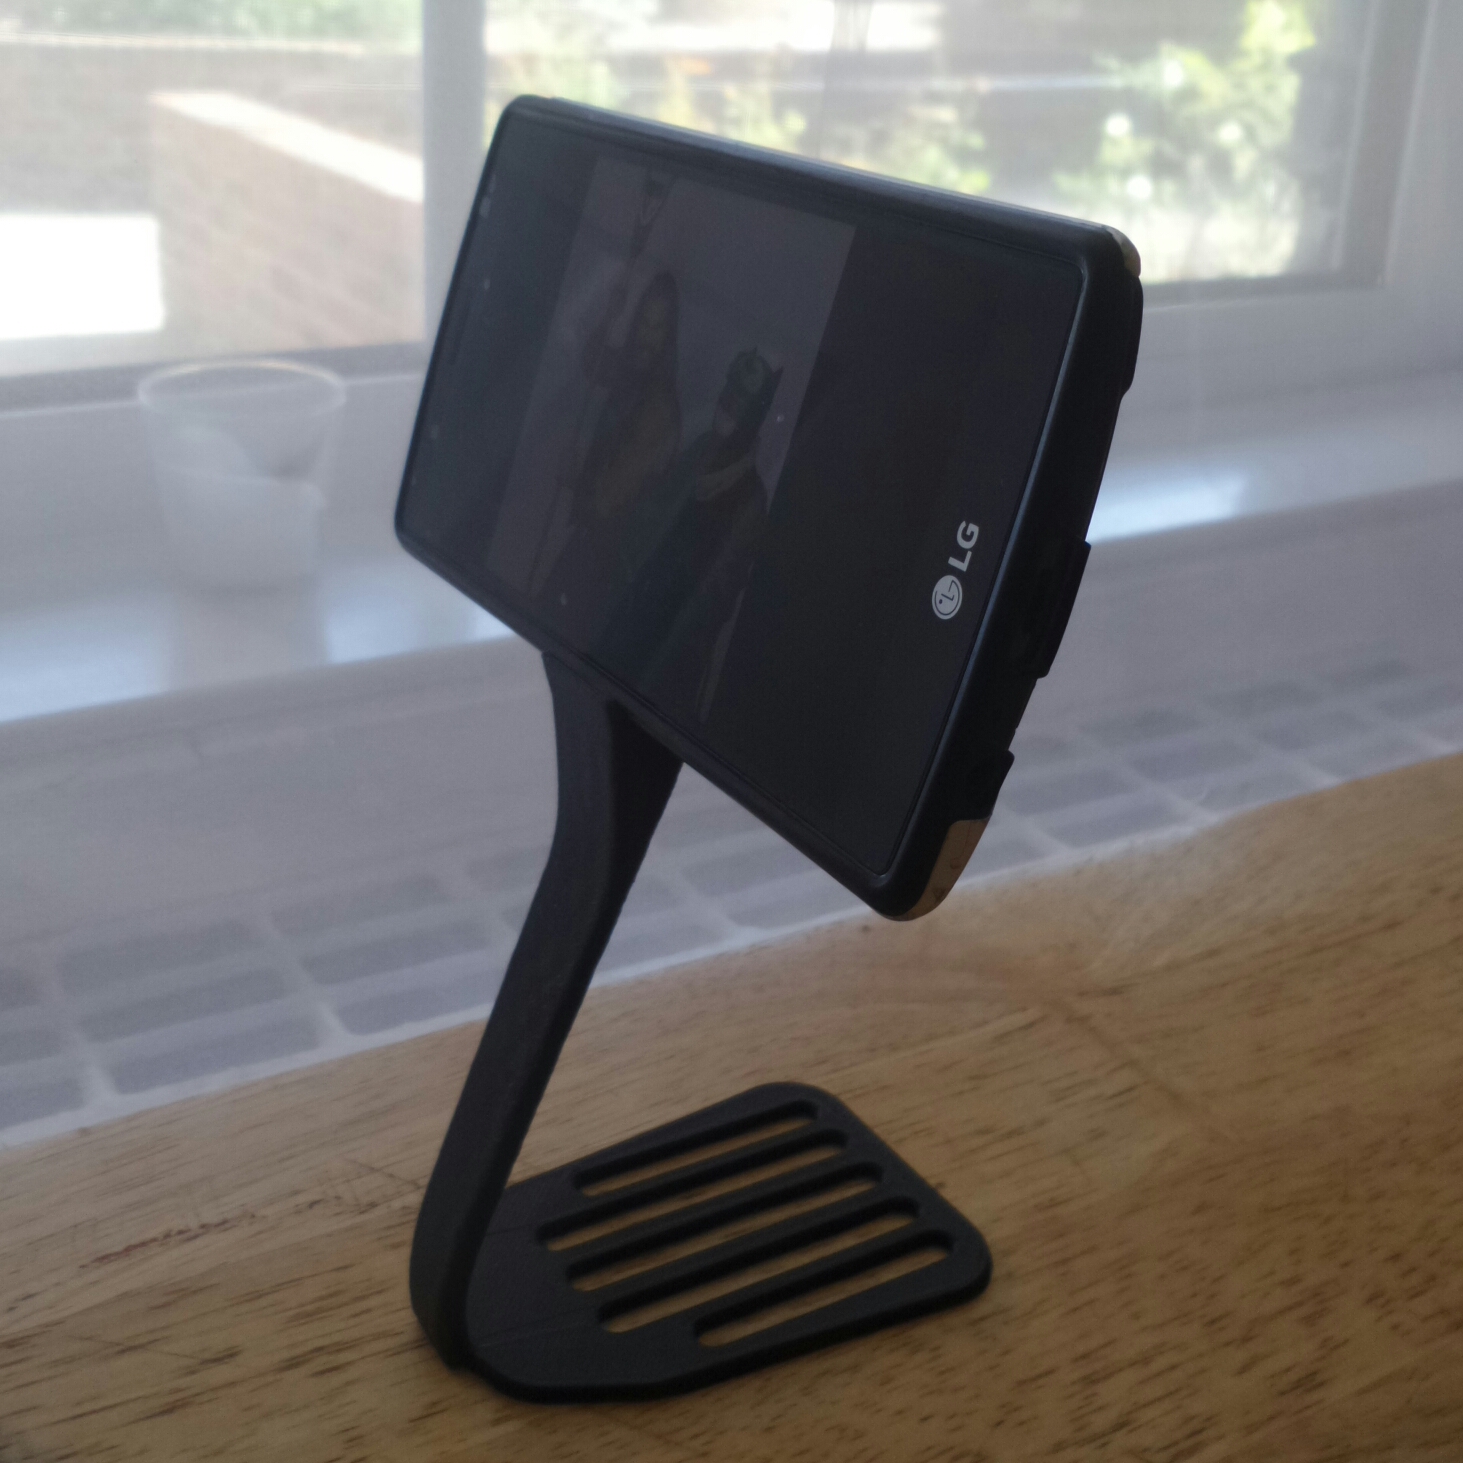 Phone stand Samsung Iphone - kitchen spatula turner